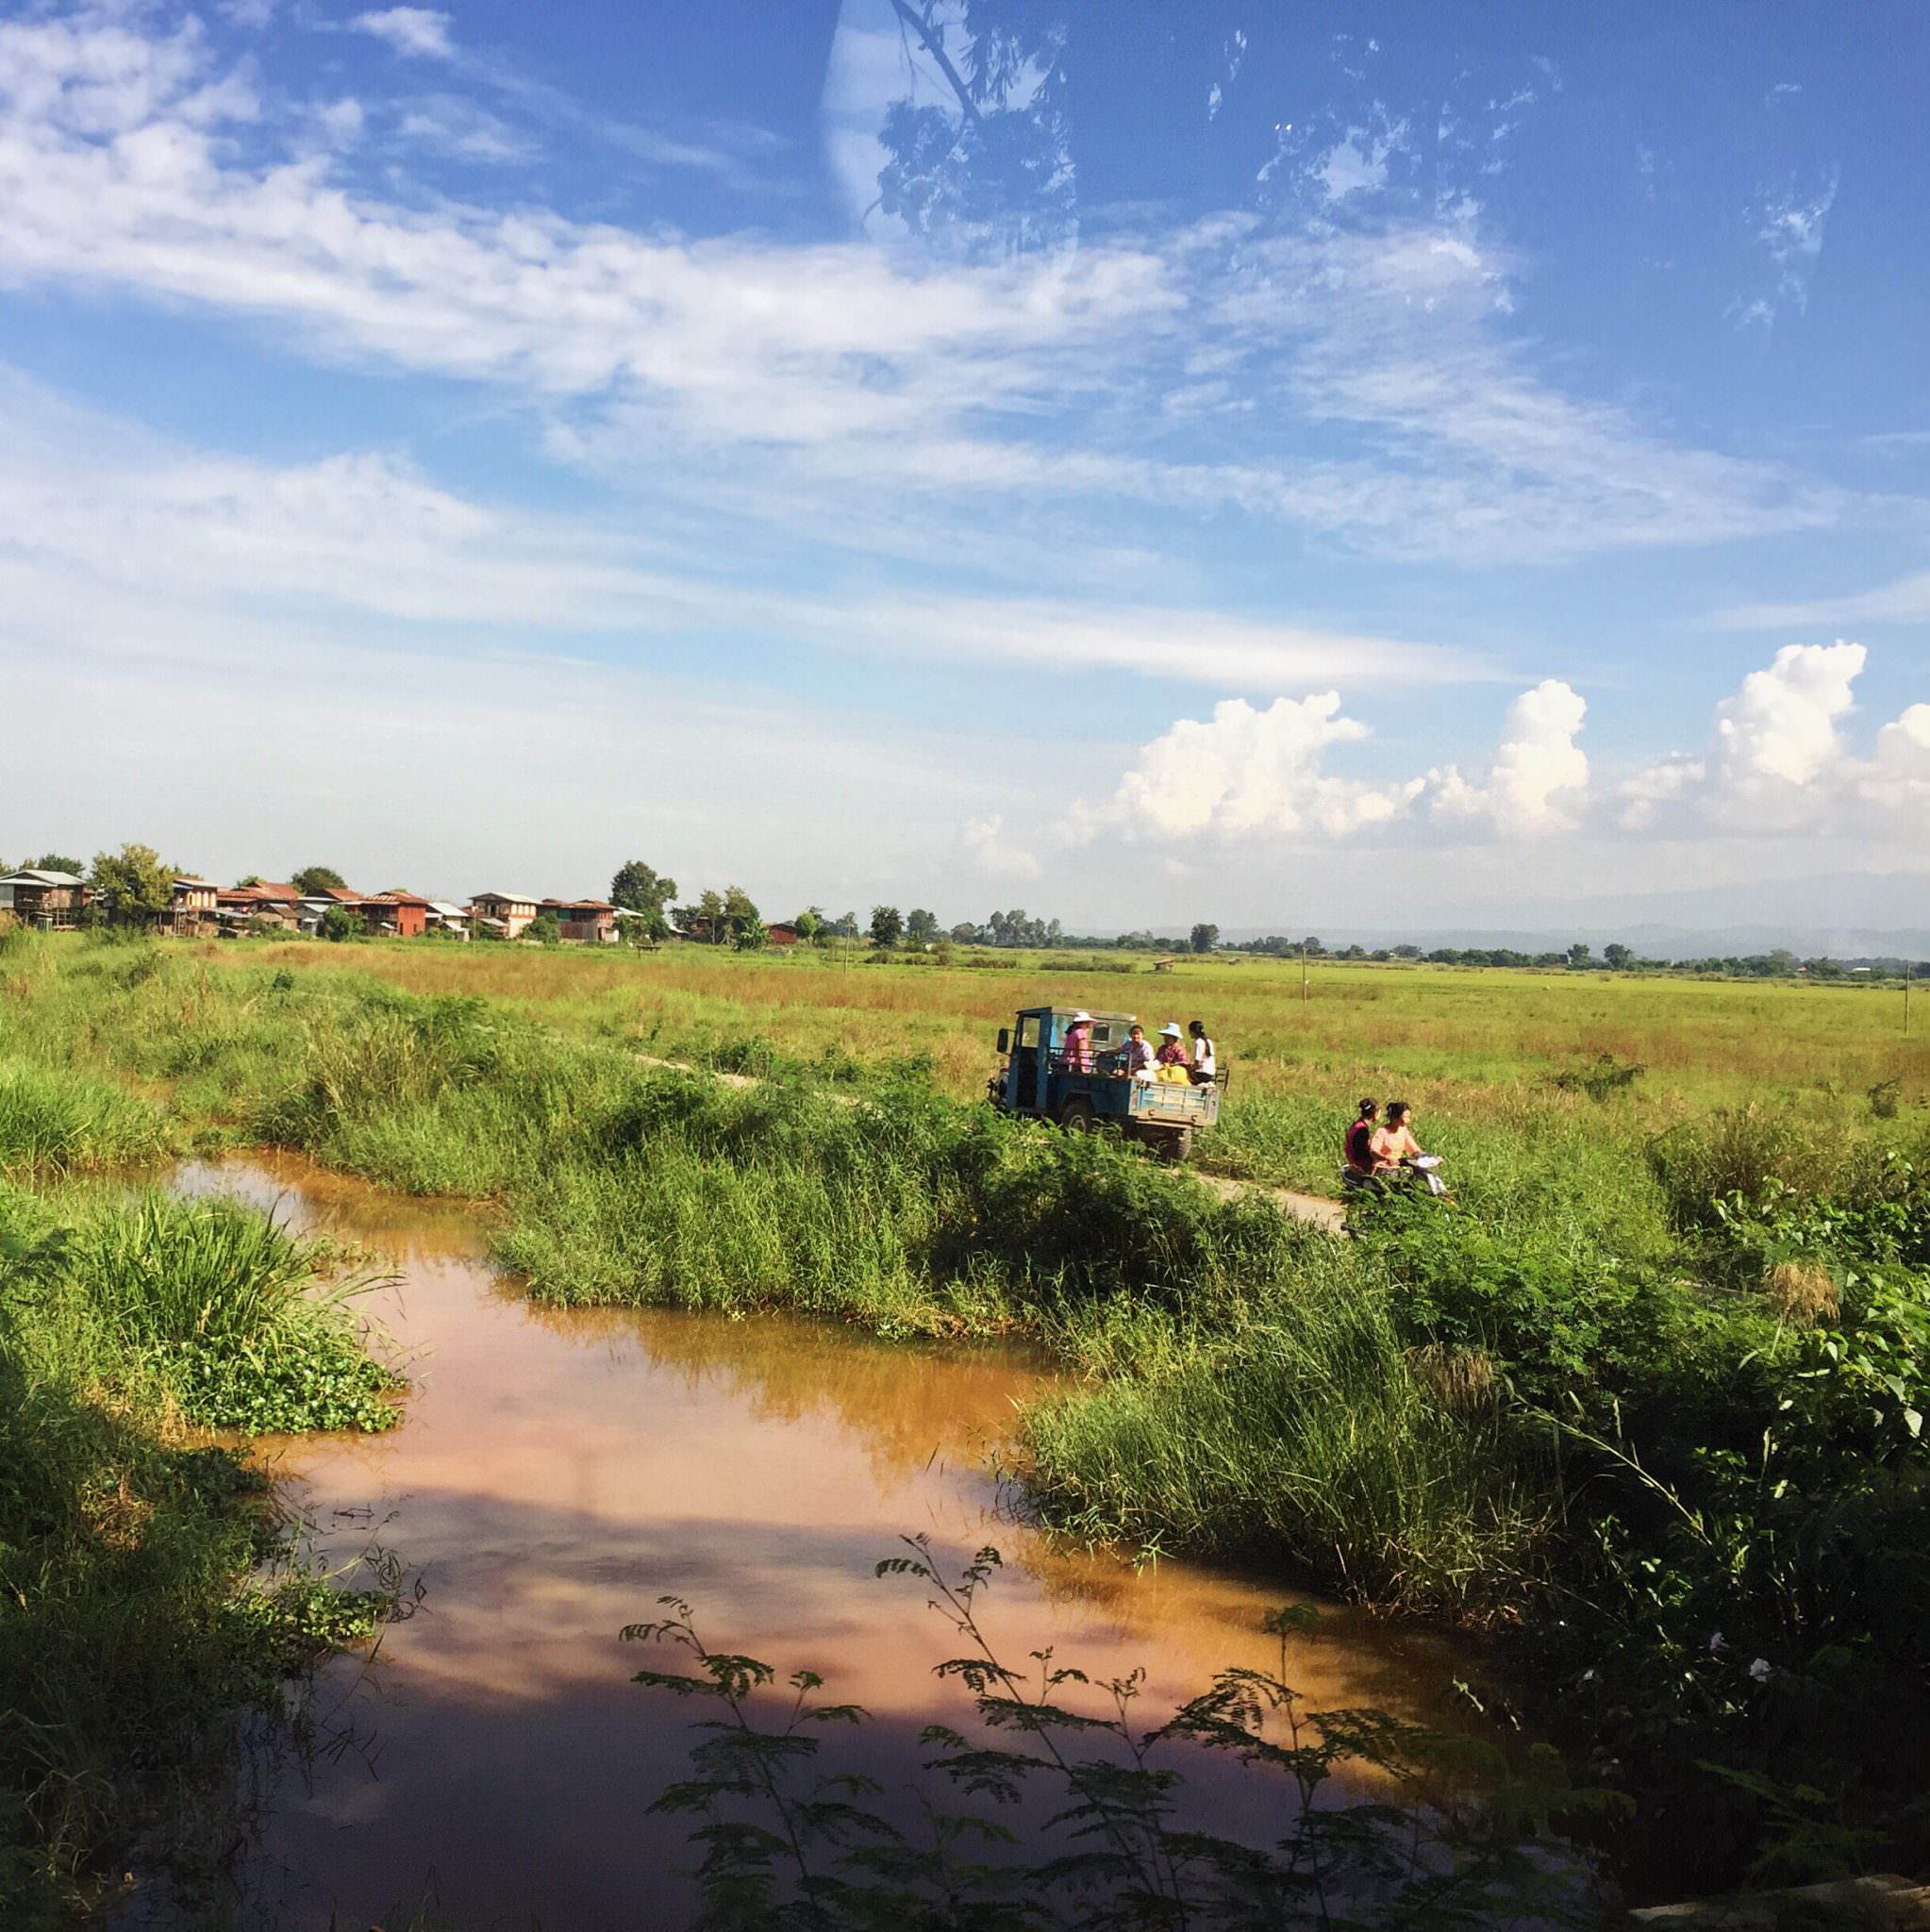 Burmese public transportation makes its way through the countryside. © 2015 Gail Jessen